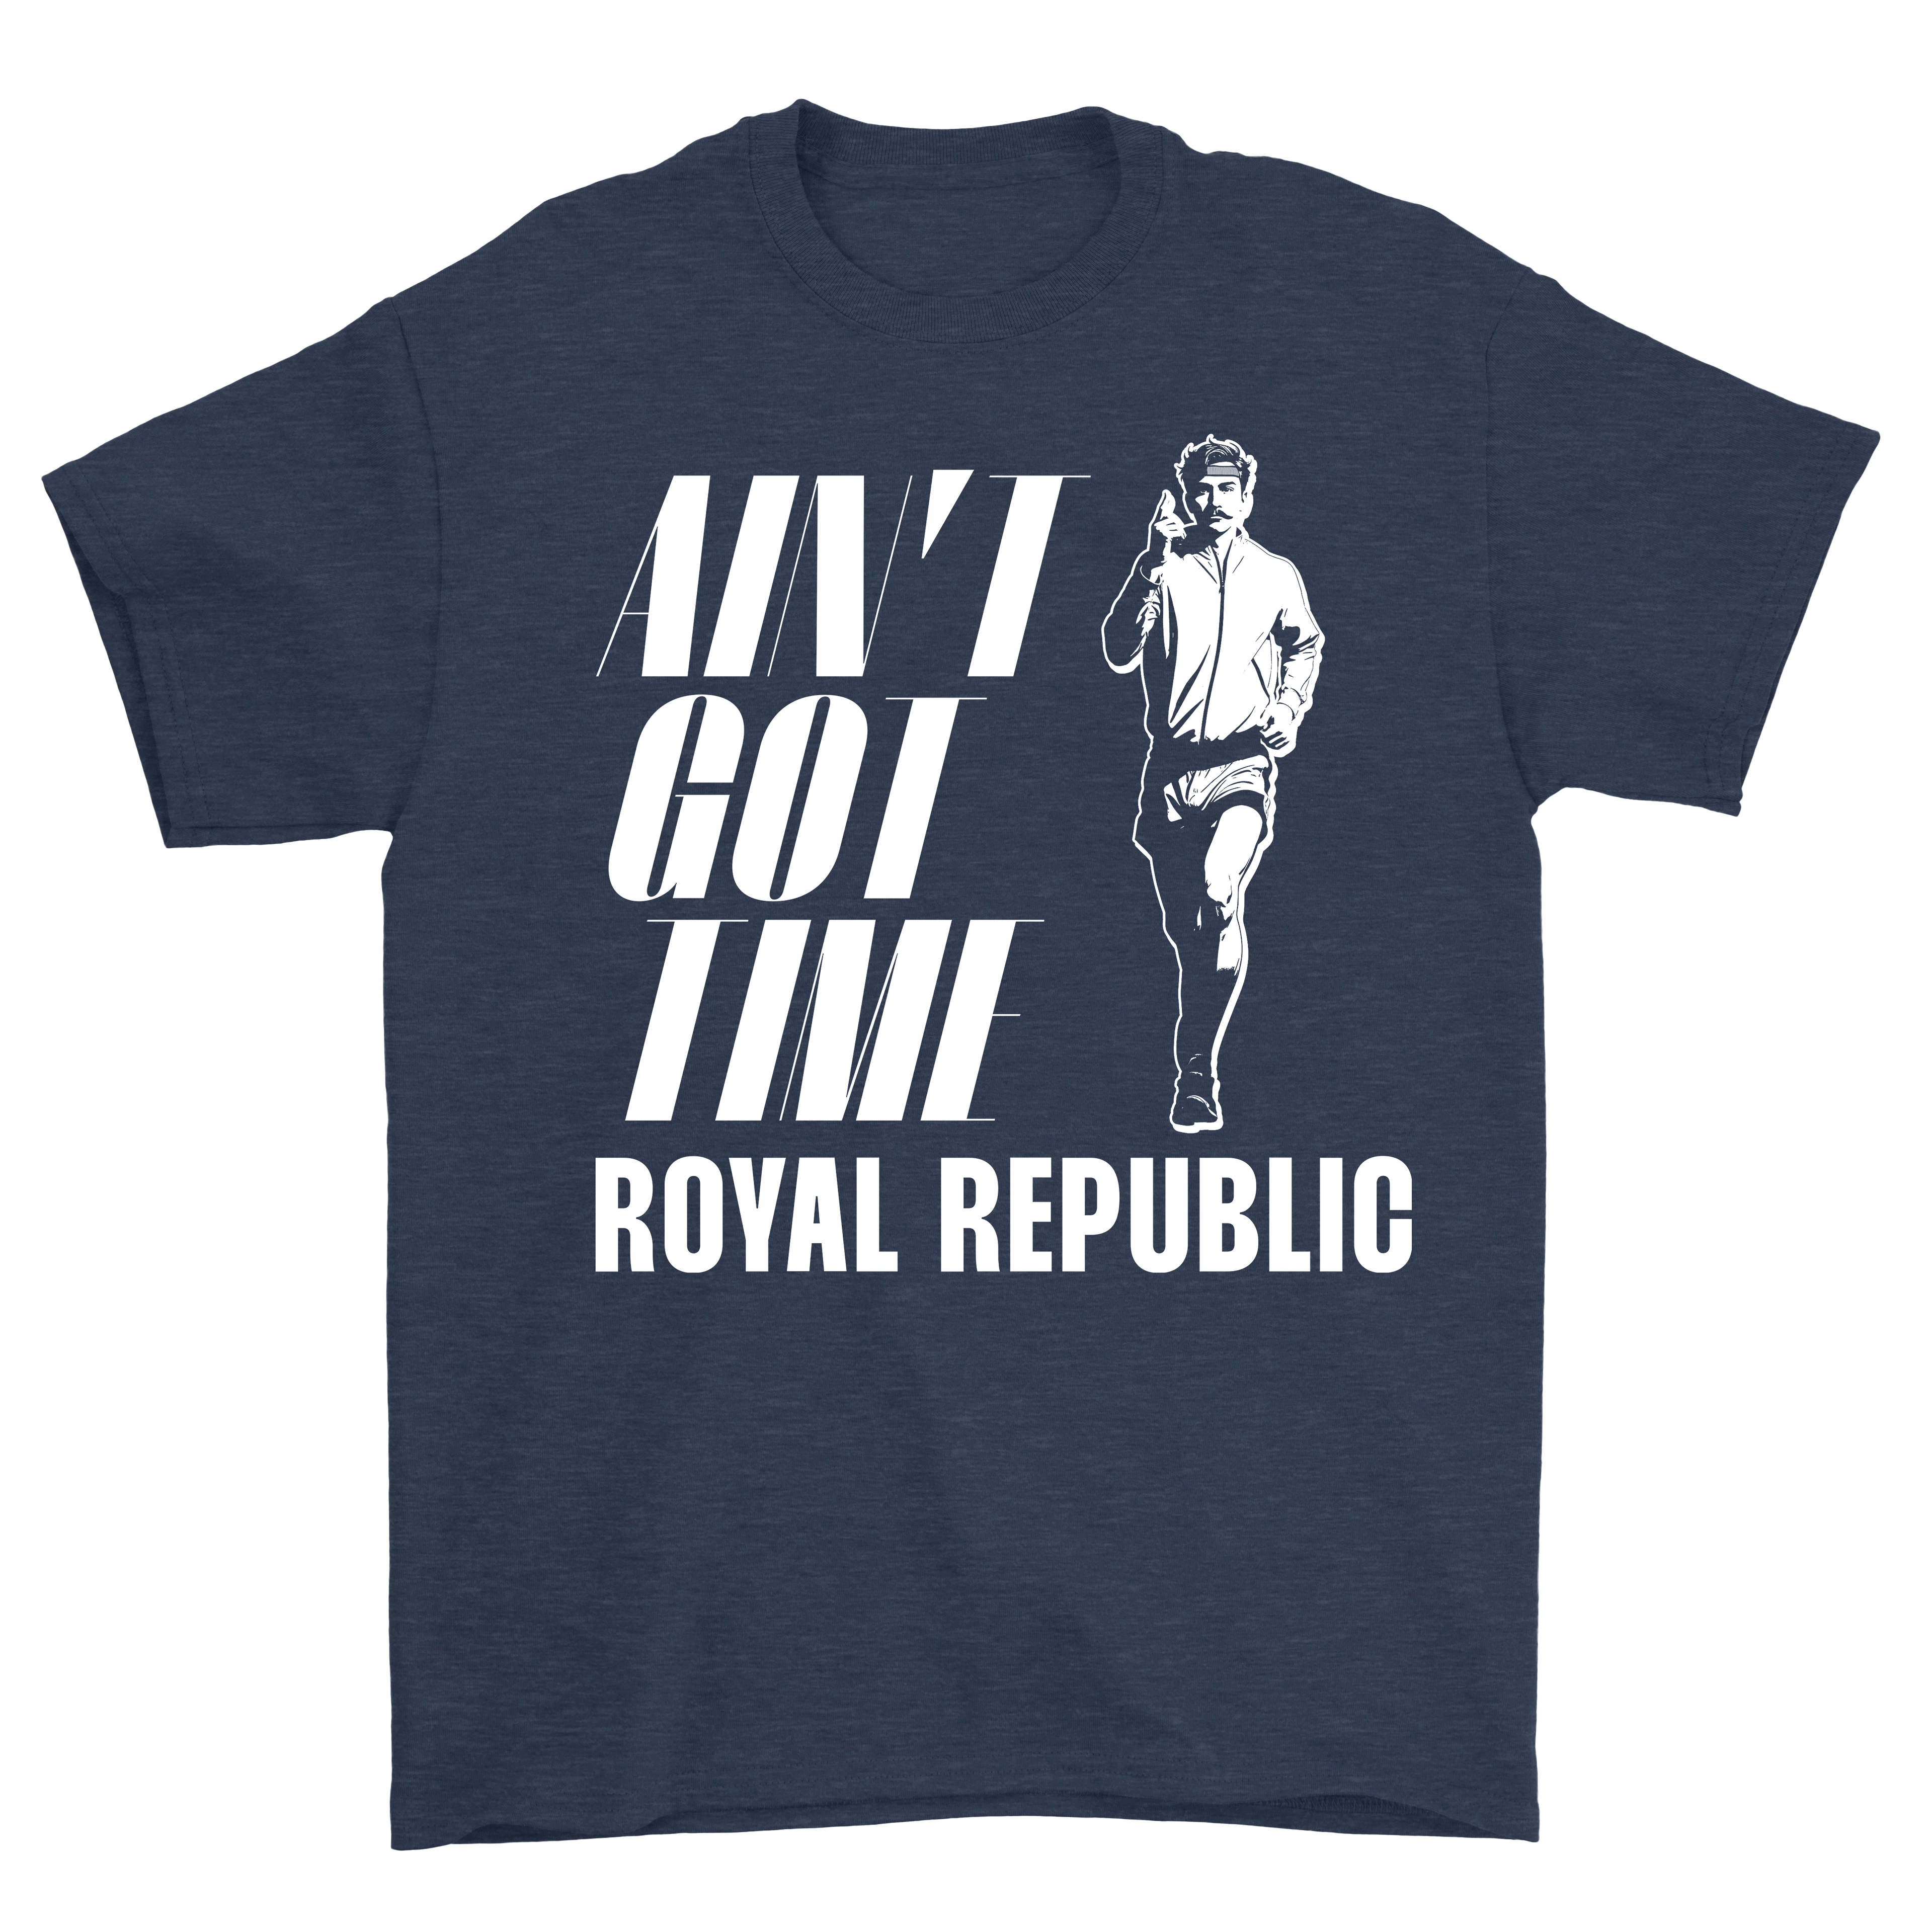 ROYAL REPUBLIC - Ain't Got Time [T-SHIRT]